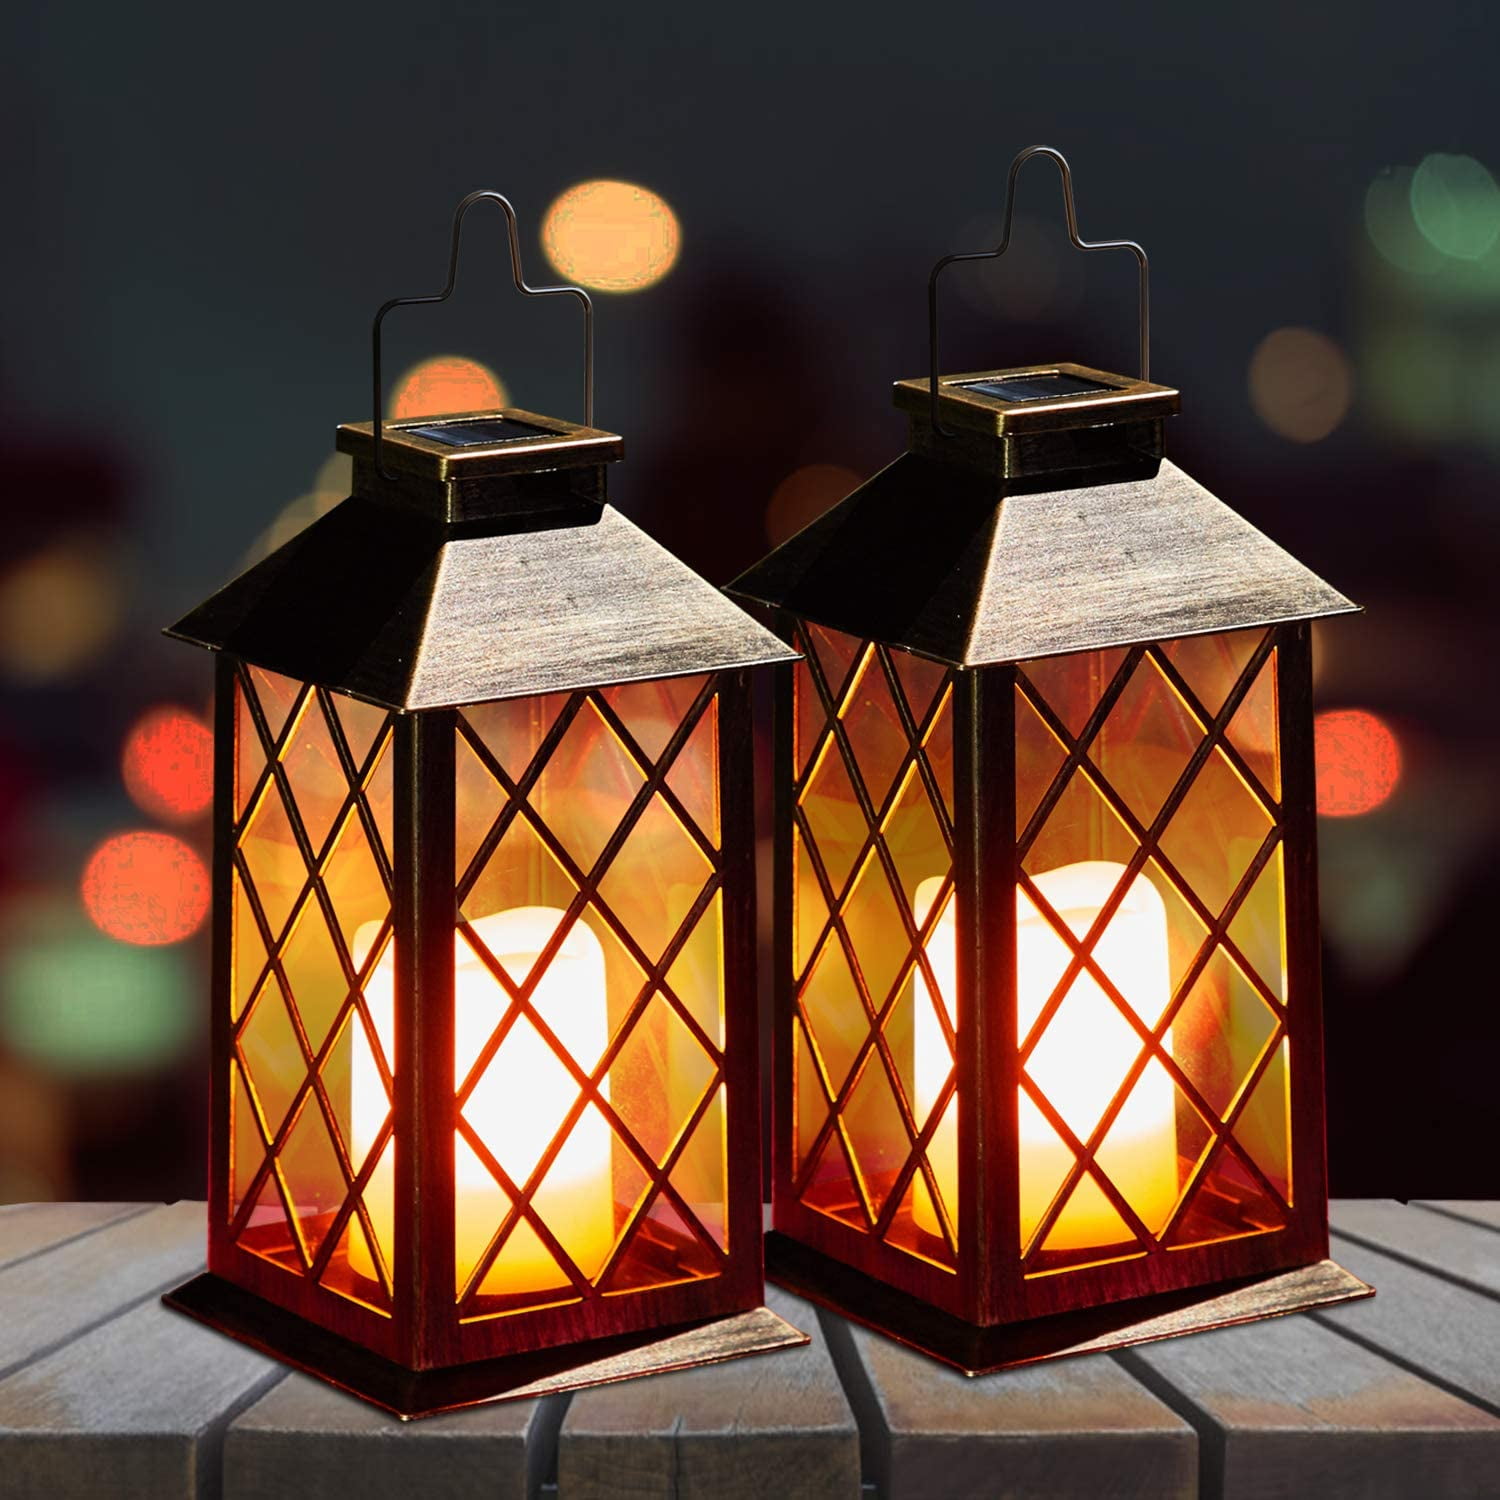 Garden Flickering Solar Power Outdoor Hanging LED Candle Lantern Light W/ Bulb 